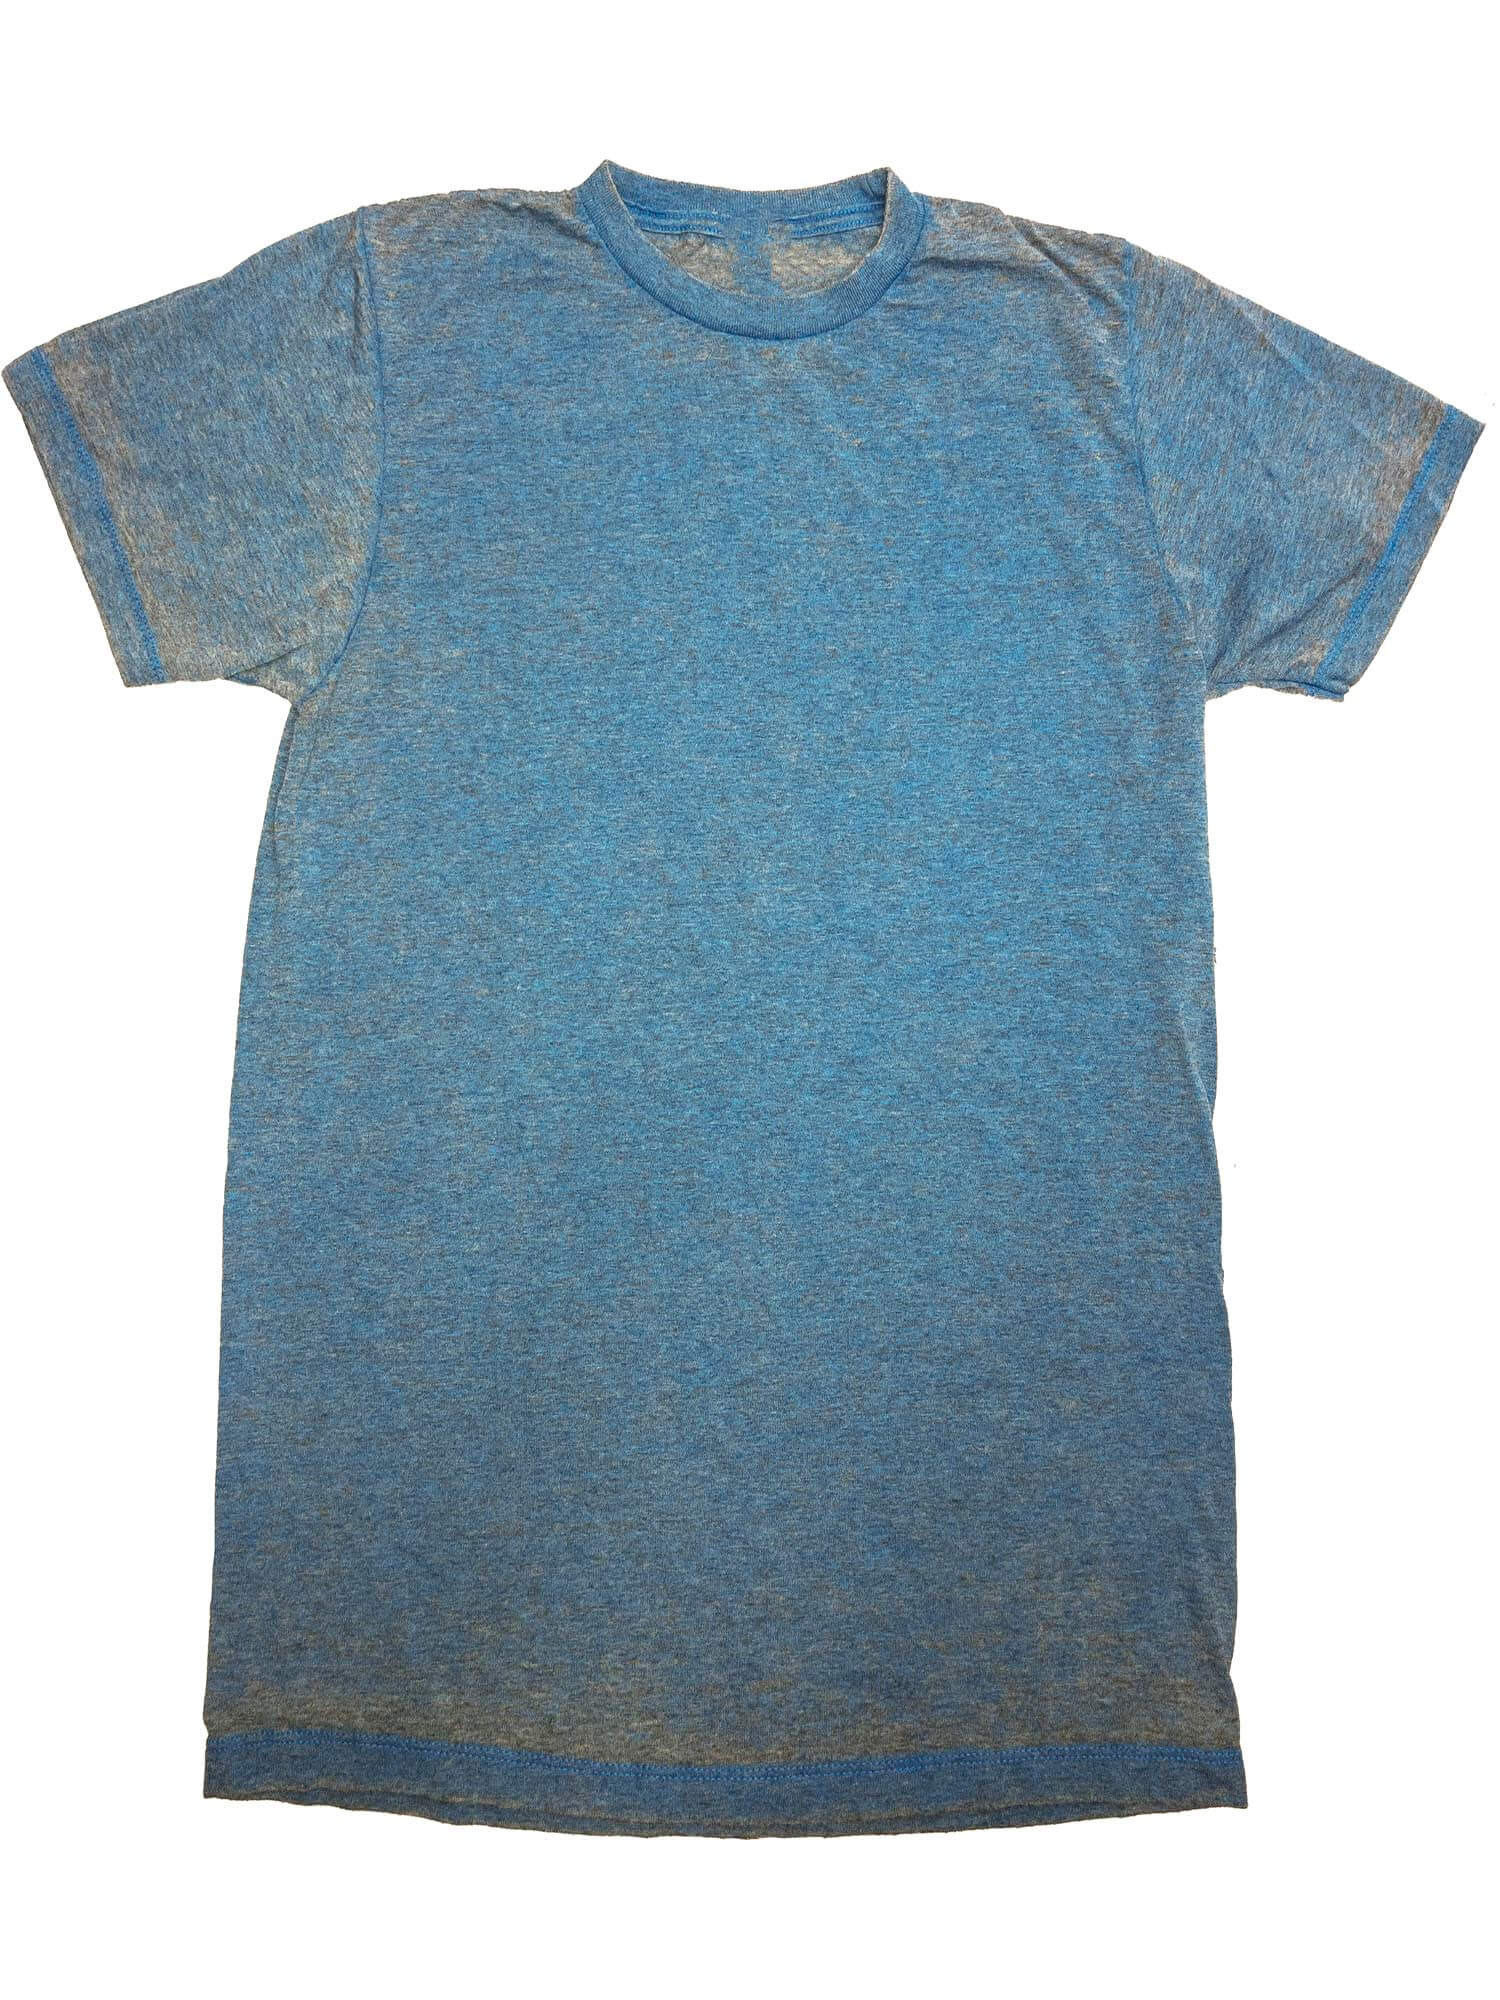 Pacific Blue Acid Wash T-Shirts Adult | Zandy's Bargains